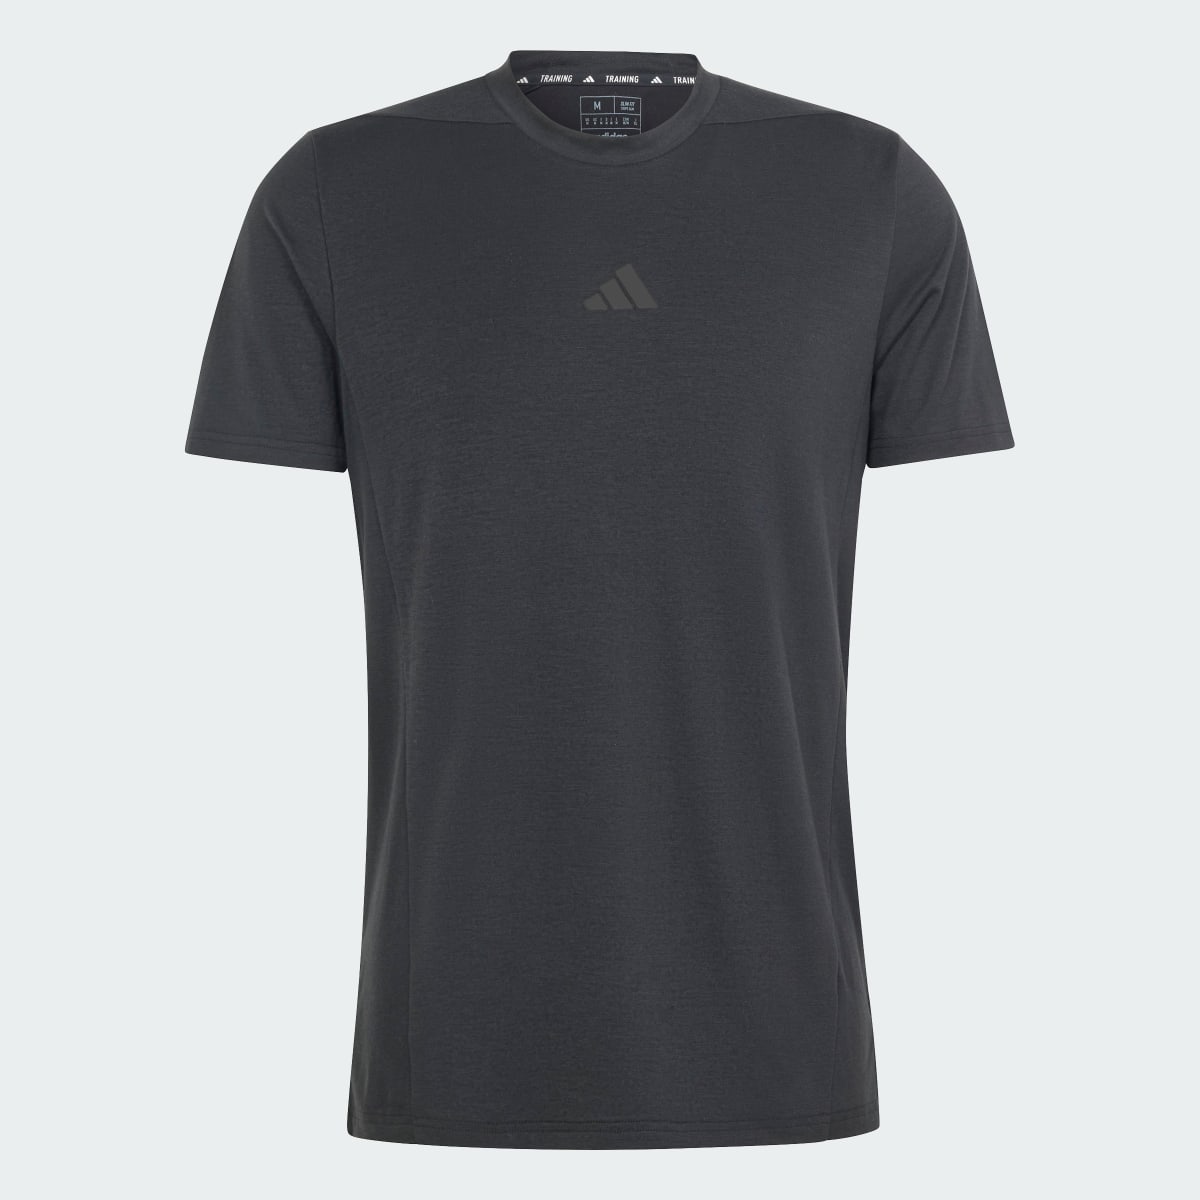 Adidas Designed for Training Workout T-Shirt. 5